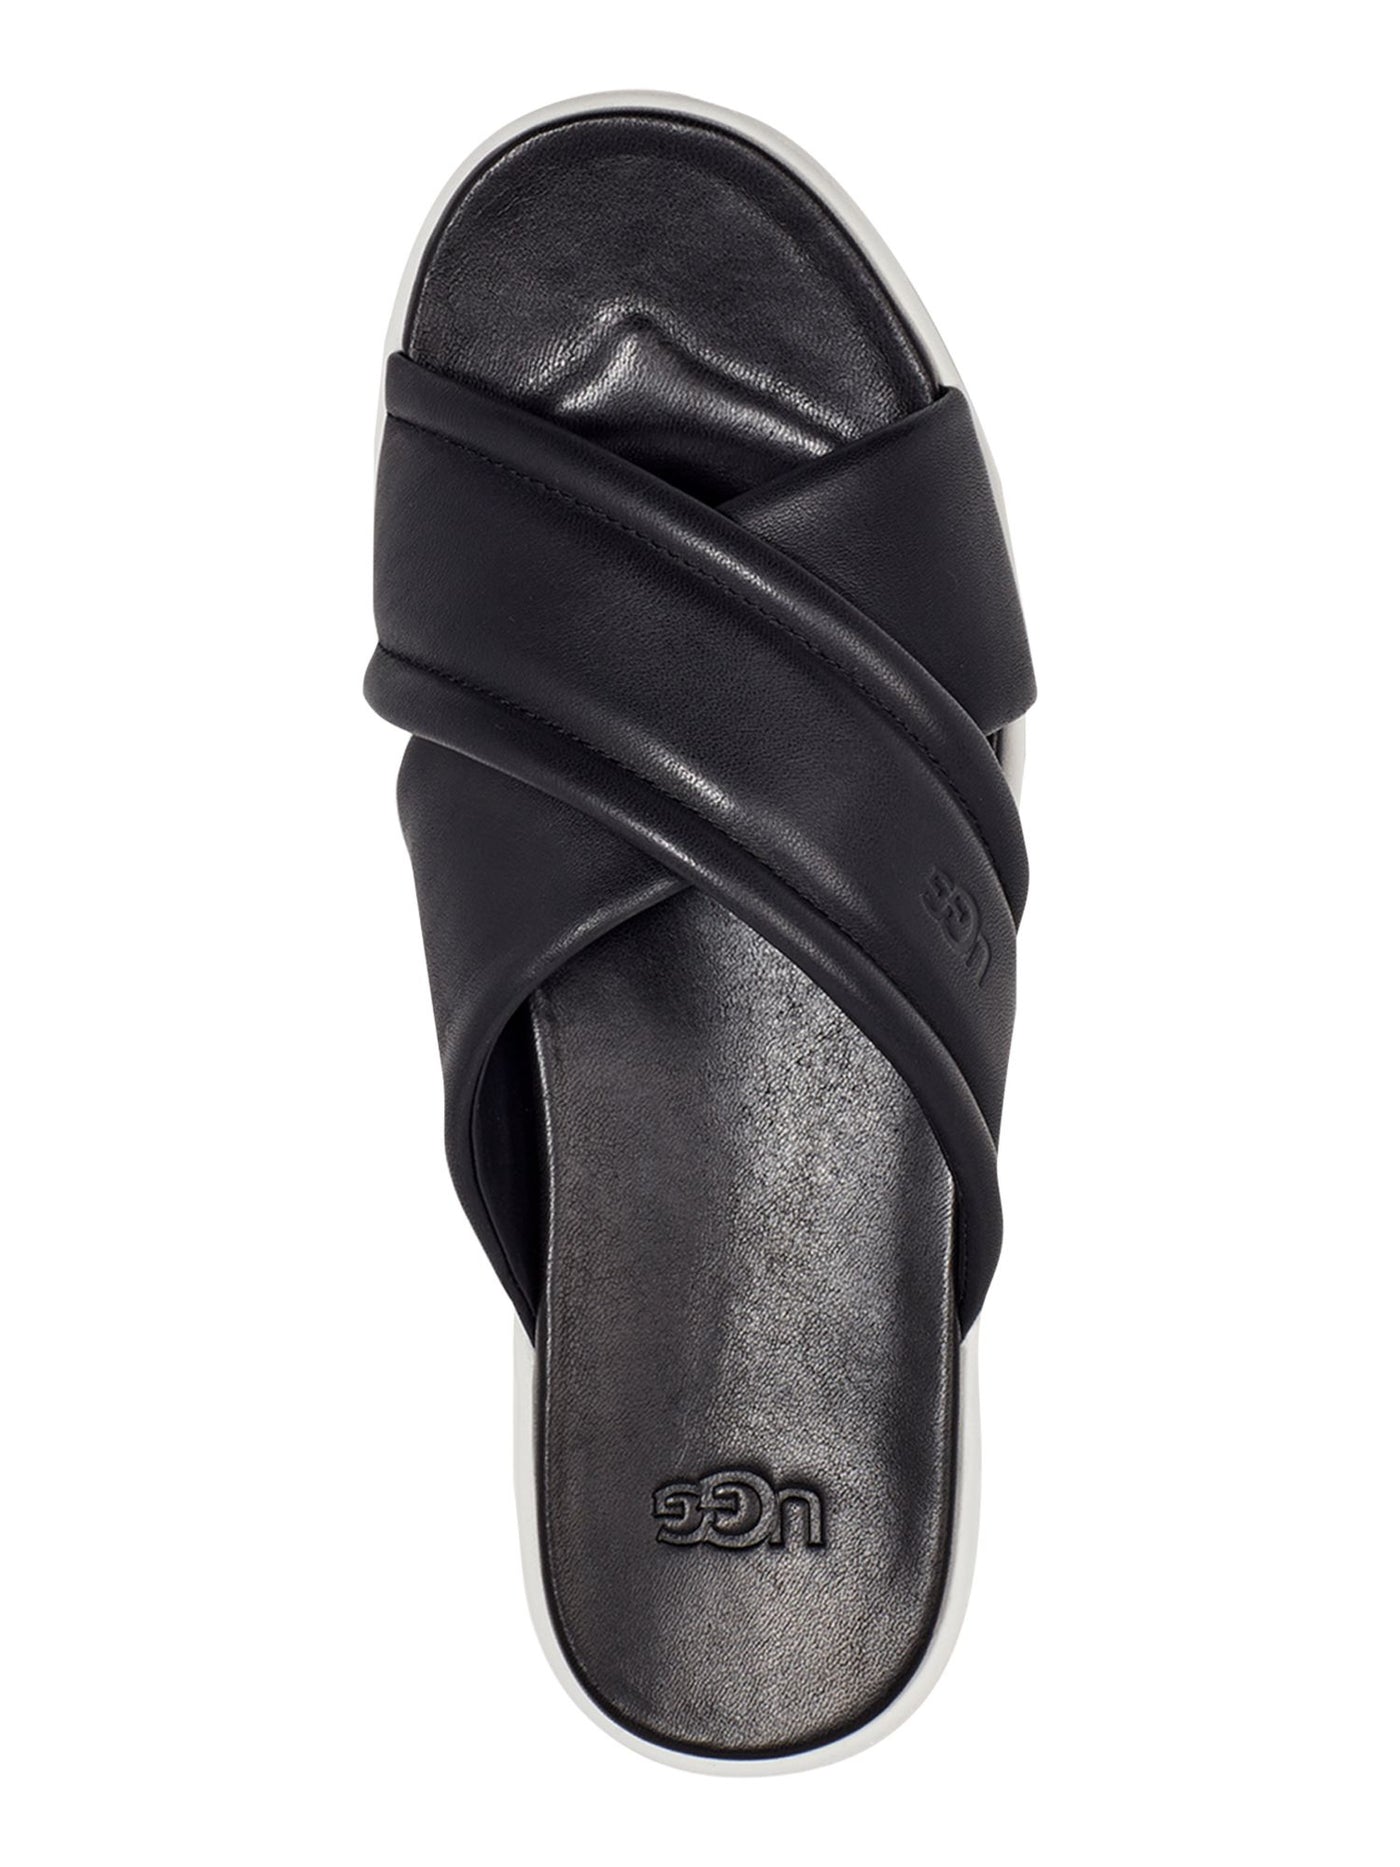 UGG Womens Black Goring Comfort Zayne Round Toe Wedge Slip On Leather Slide Sandals 6